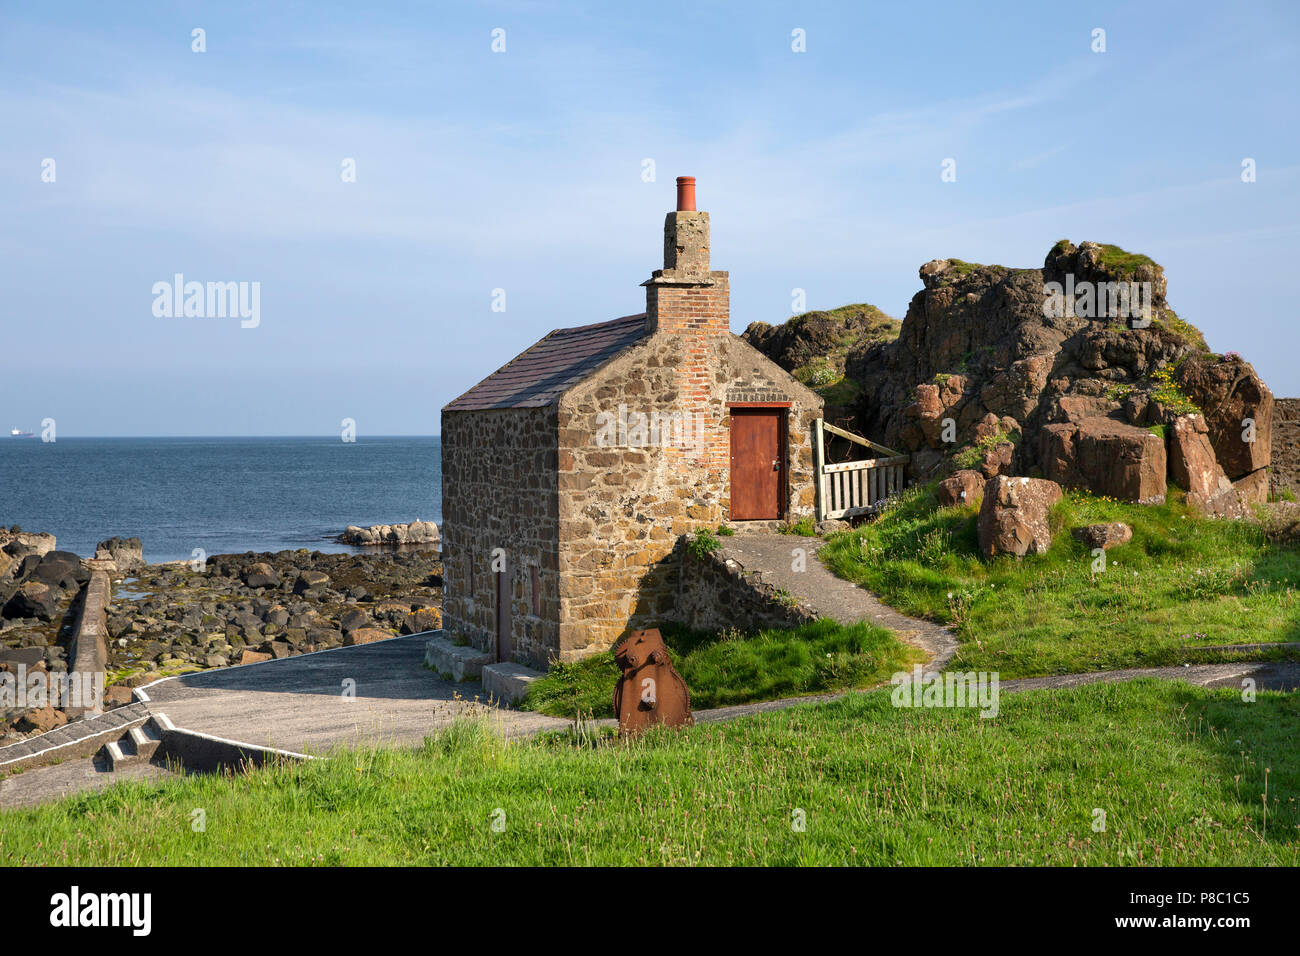 UK, Northern Ireland, Co Londonderry, Portstewart, The Berne, Fisherman’s landing place Stock Photo